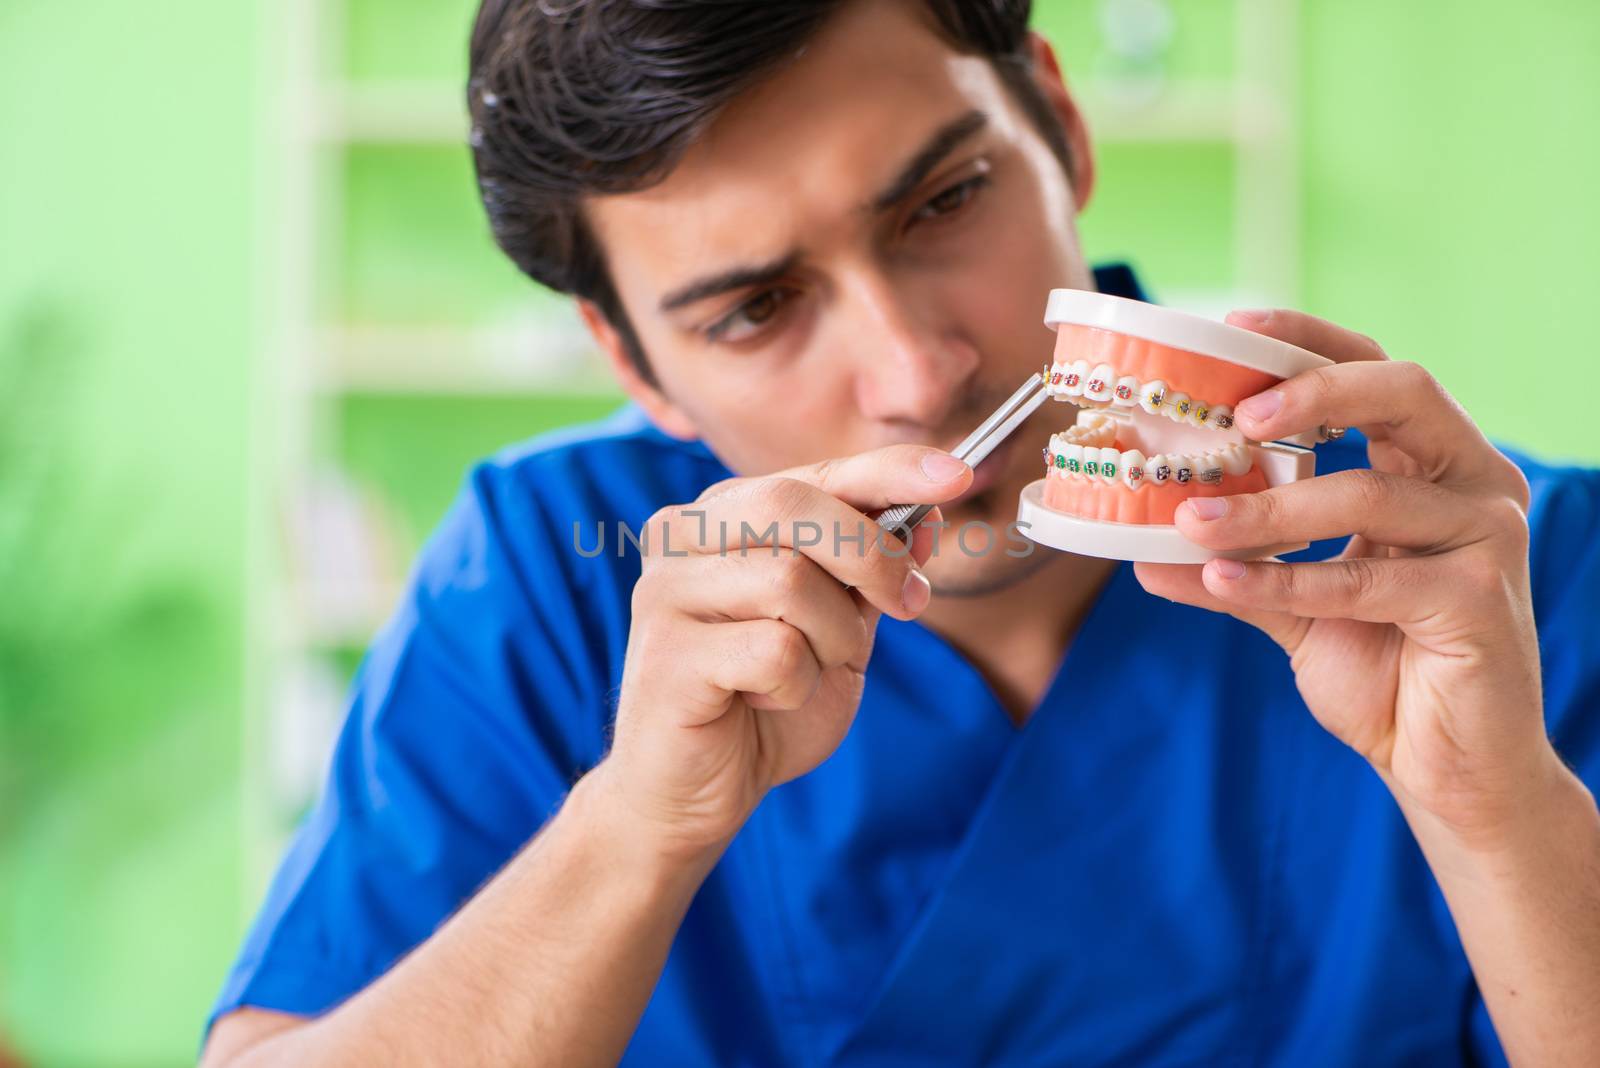 Man dentist working on new teeth implant 